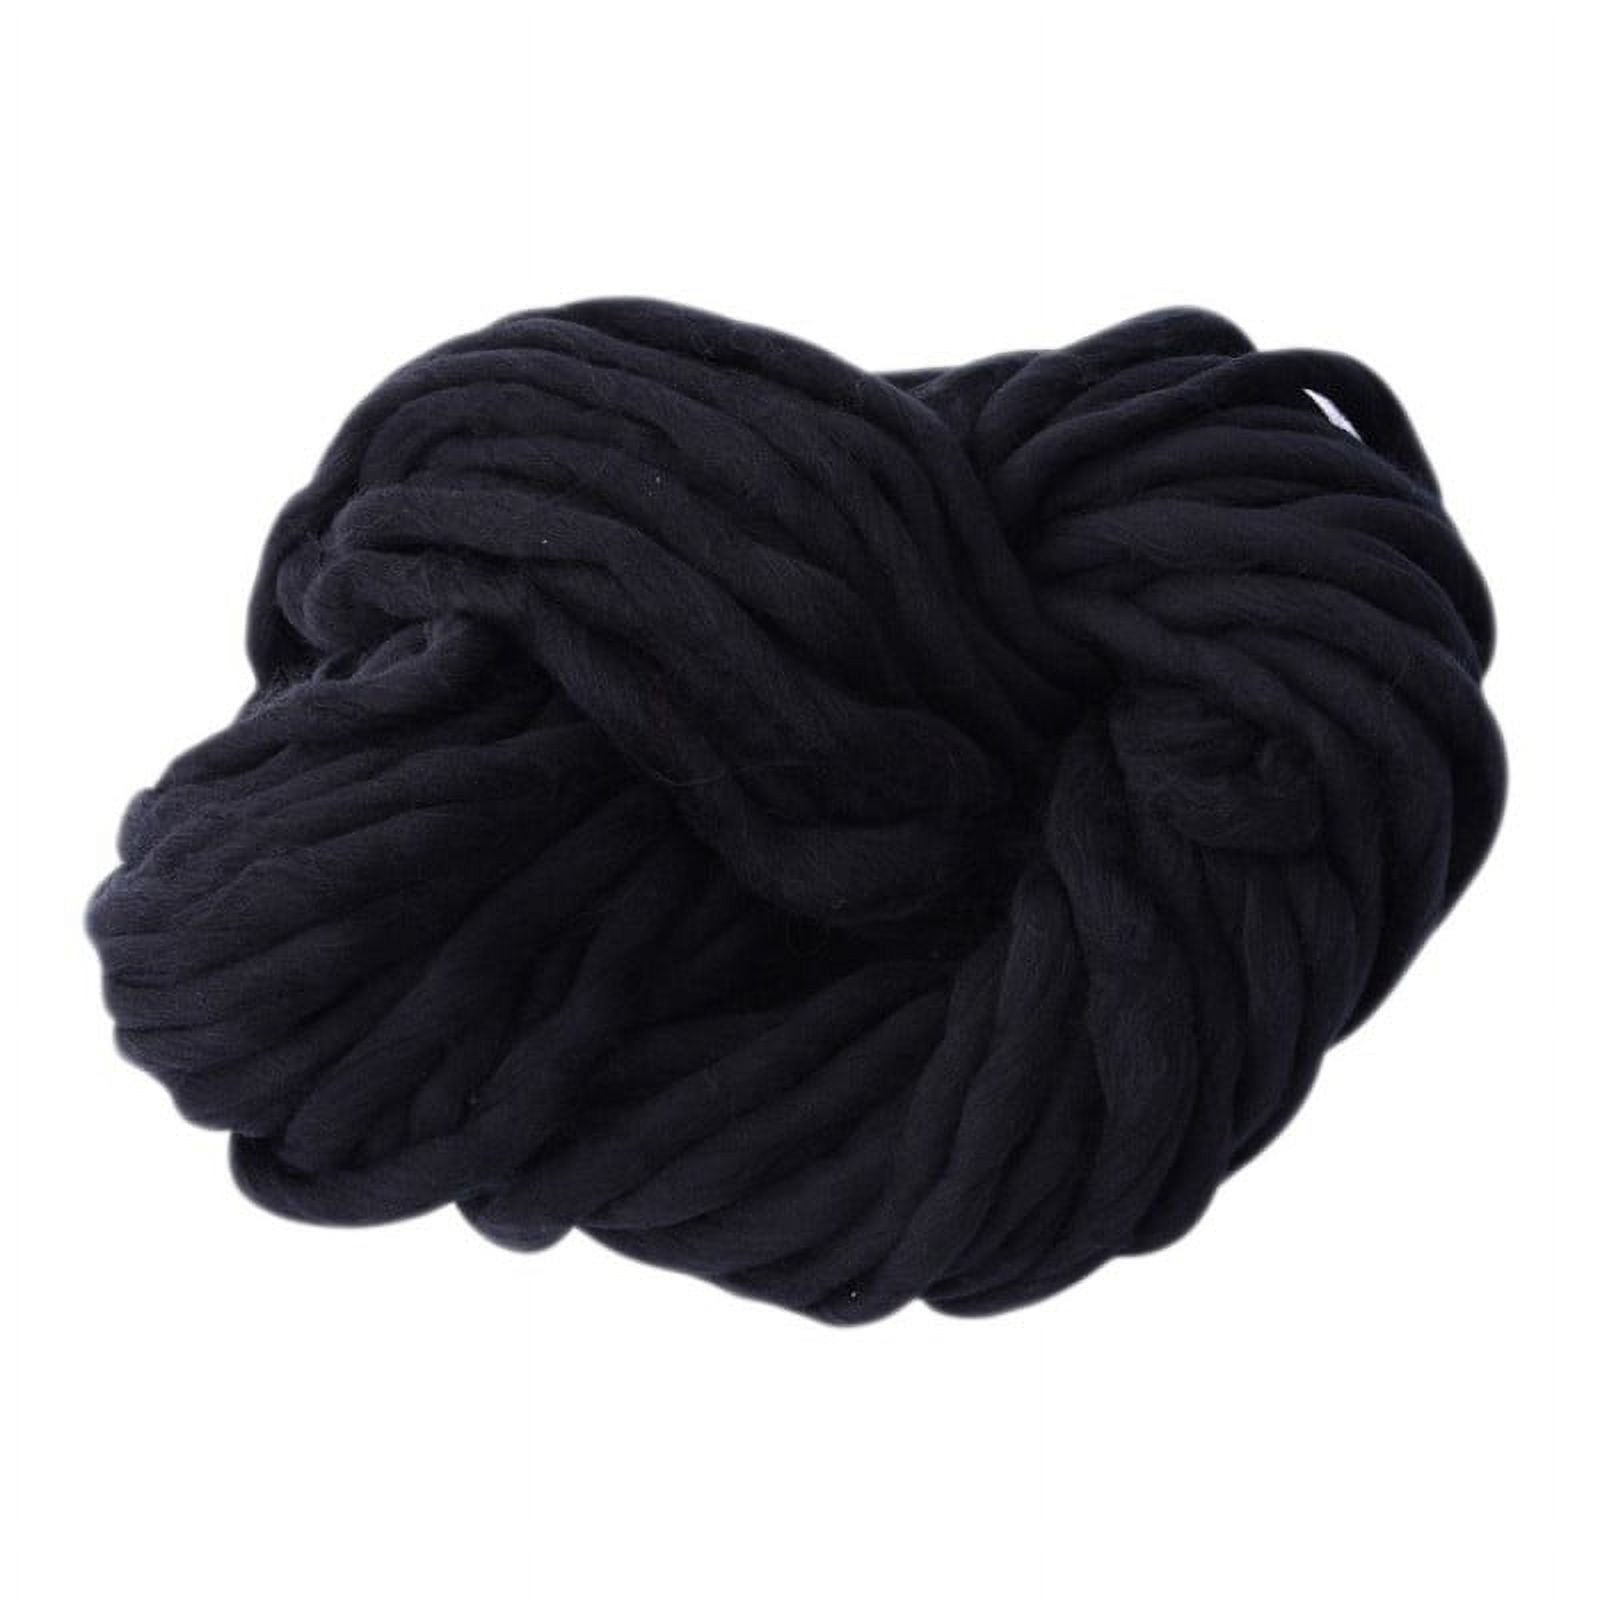 Uheoun Bulk Yarn Clearance Sale for Crocheting, 1PC 50g Chunky